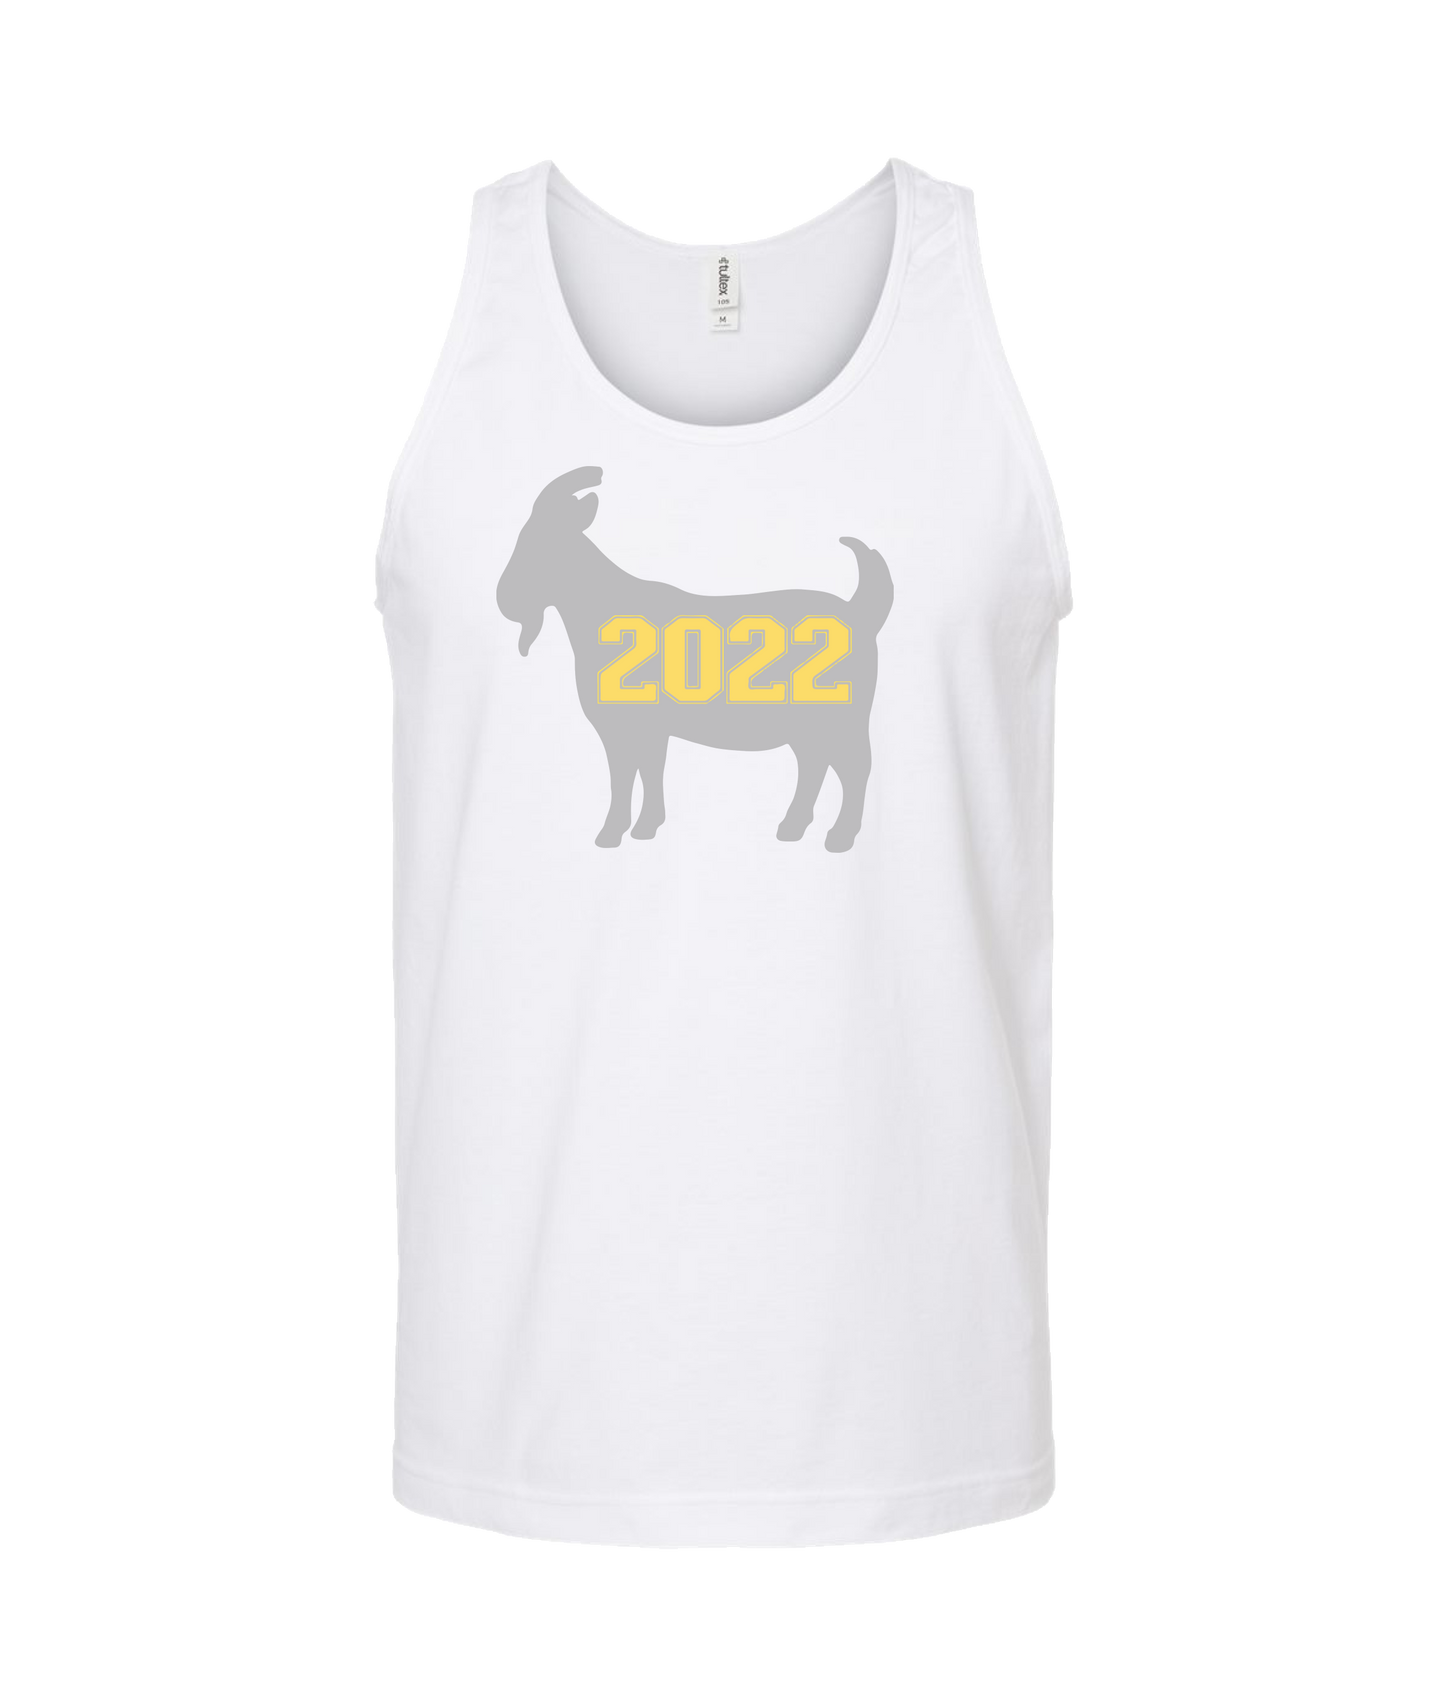 The Sportsocracy - Goat 2022 - White Tank Top